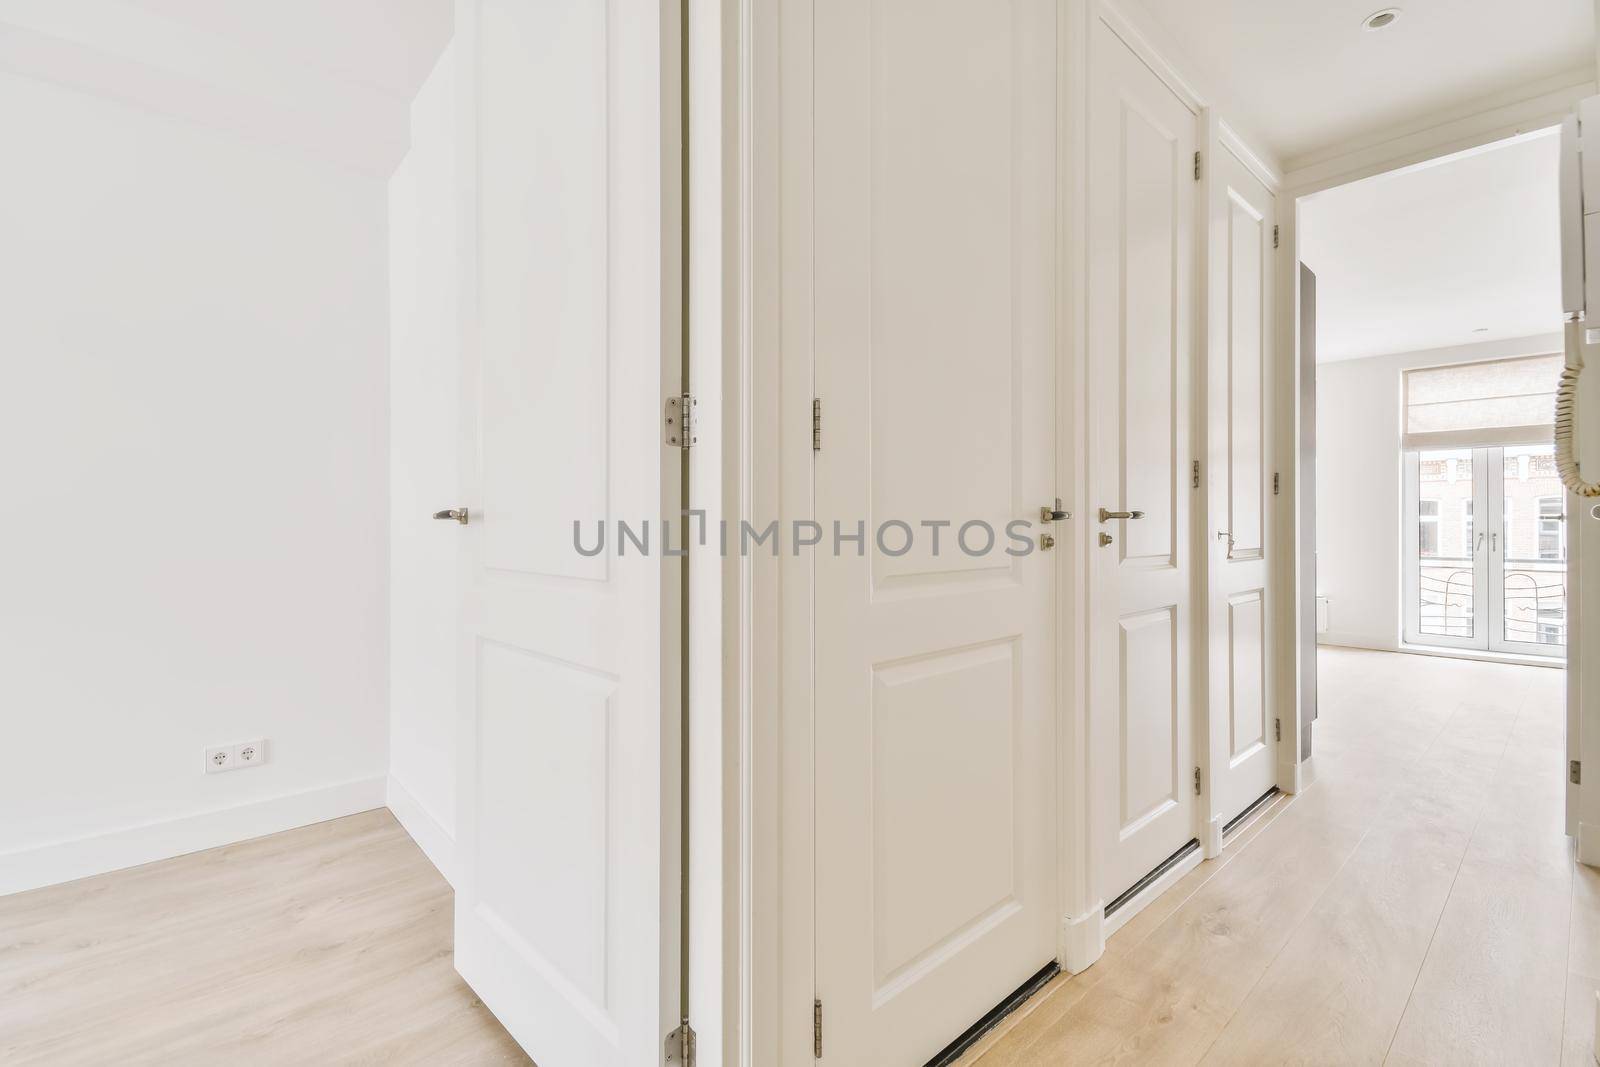 A long empty corridor designed in minimalistic style